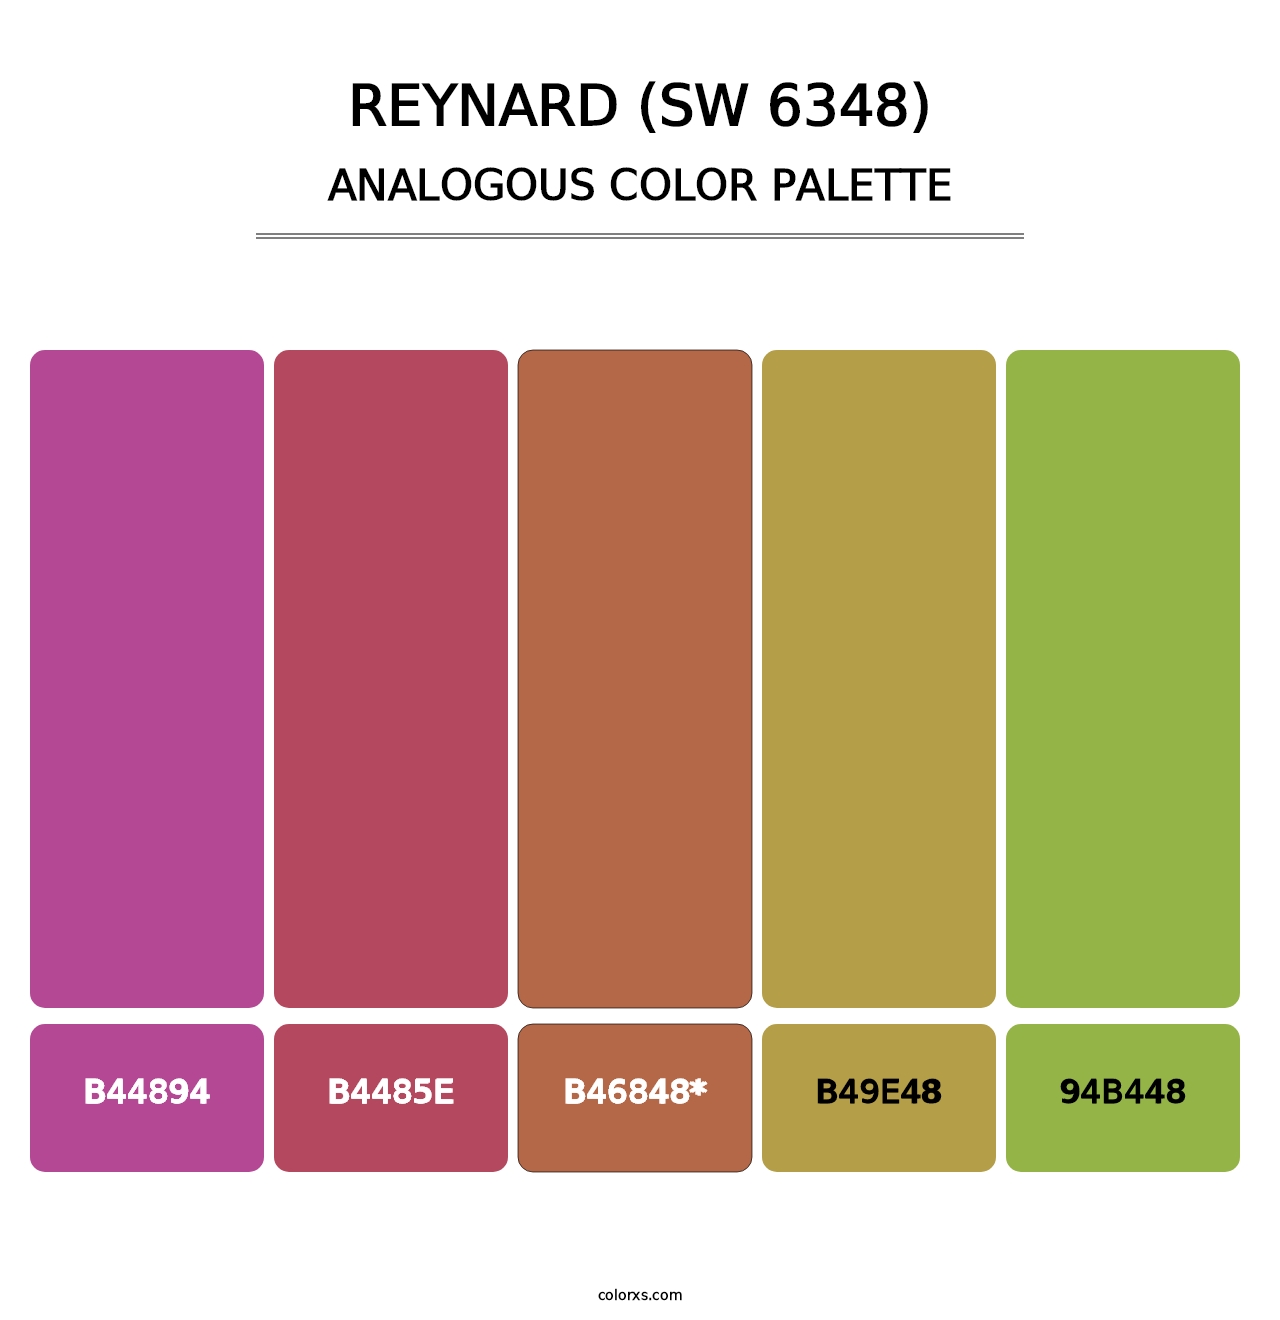 Reynard (SW 6348) - Analogous Color Palette